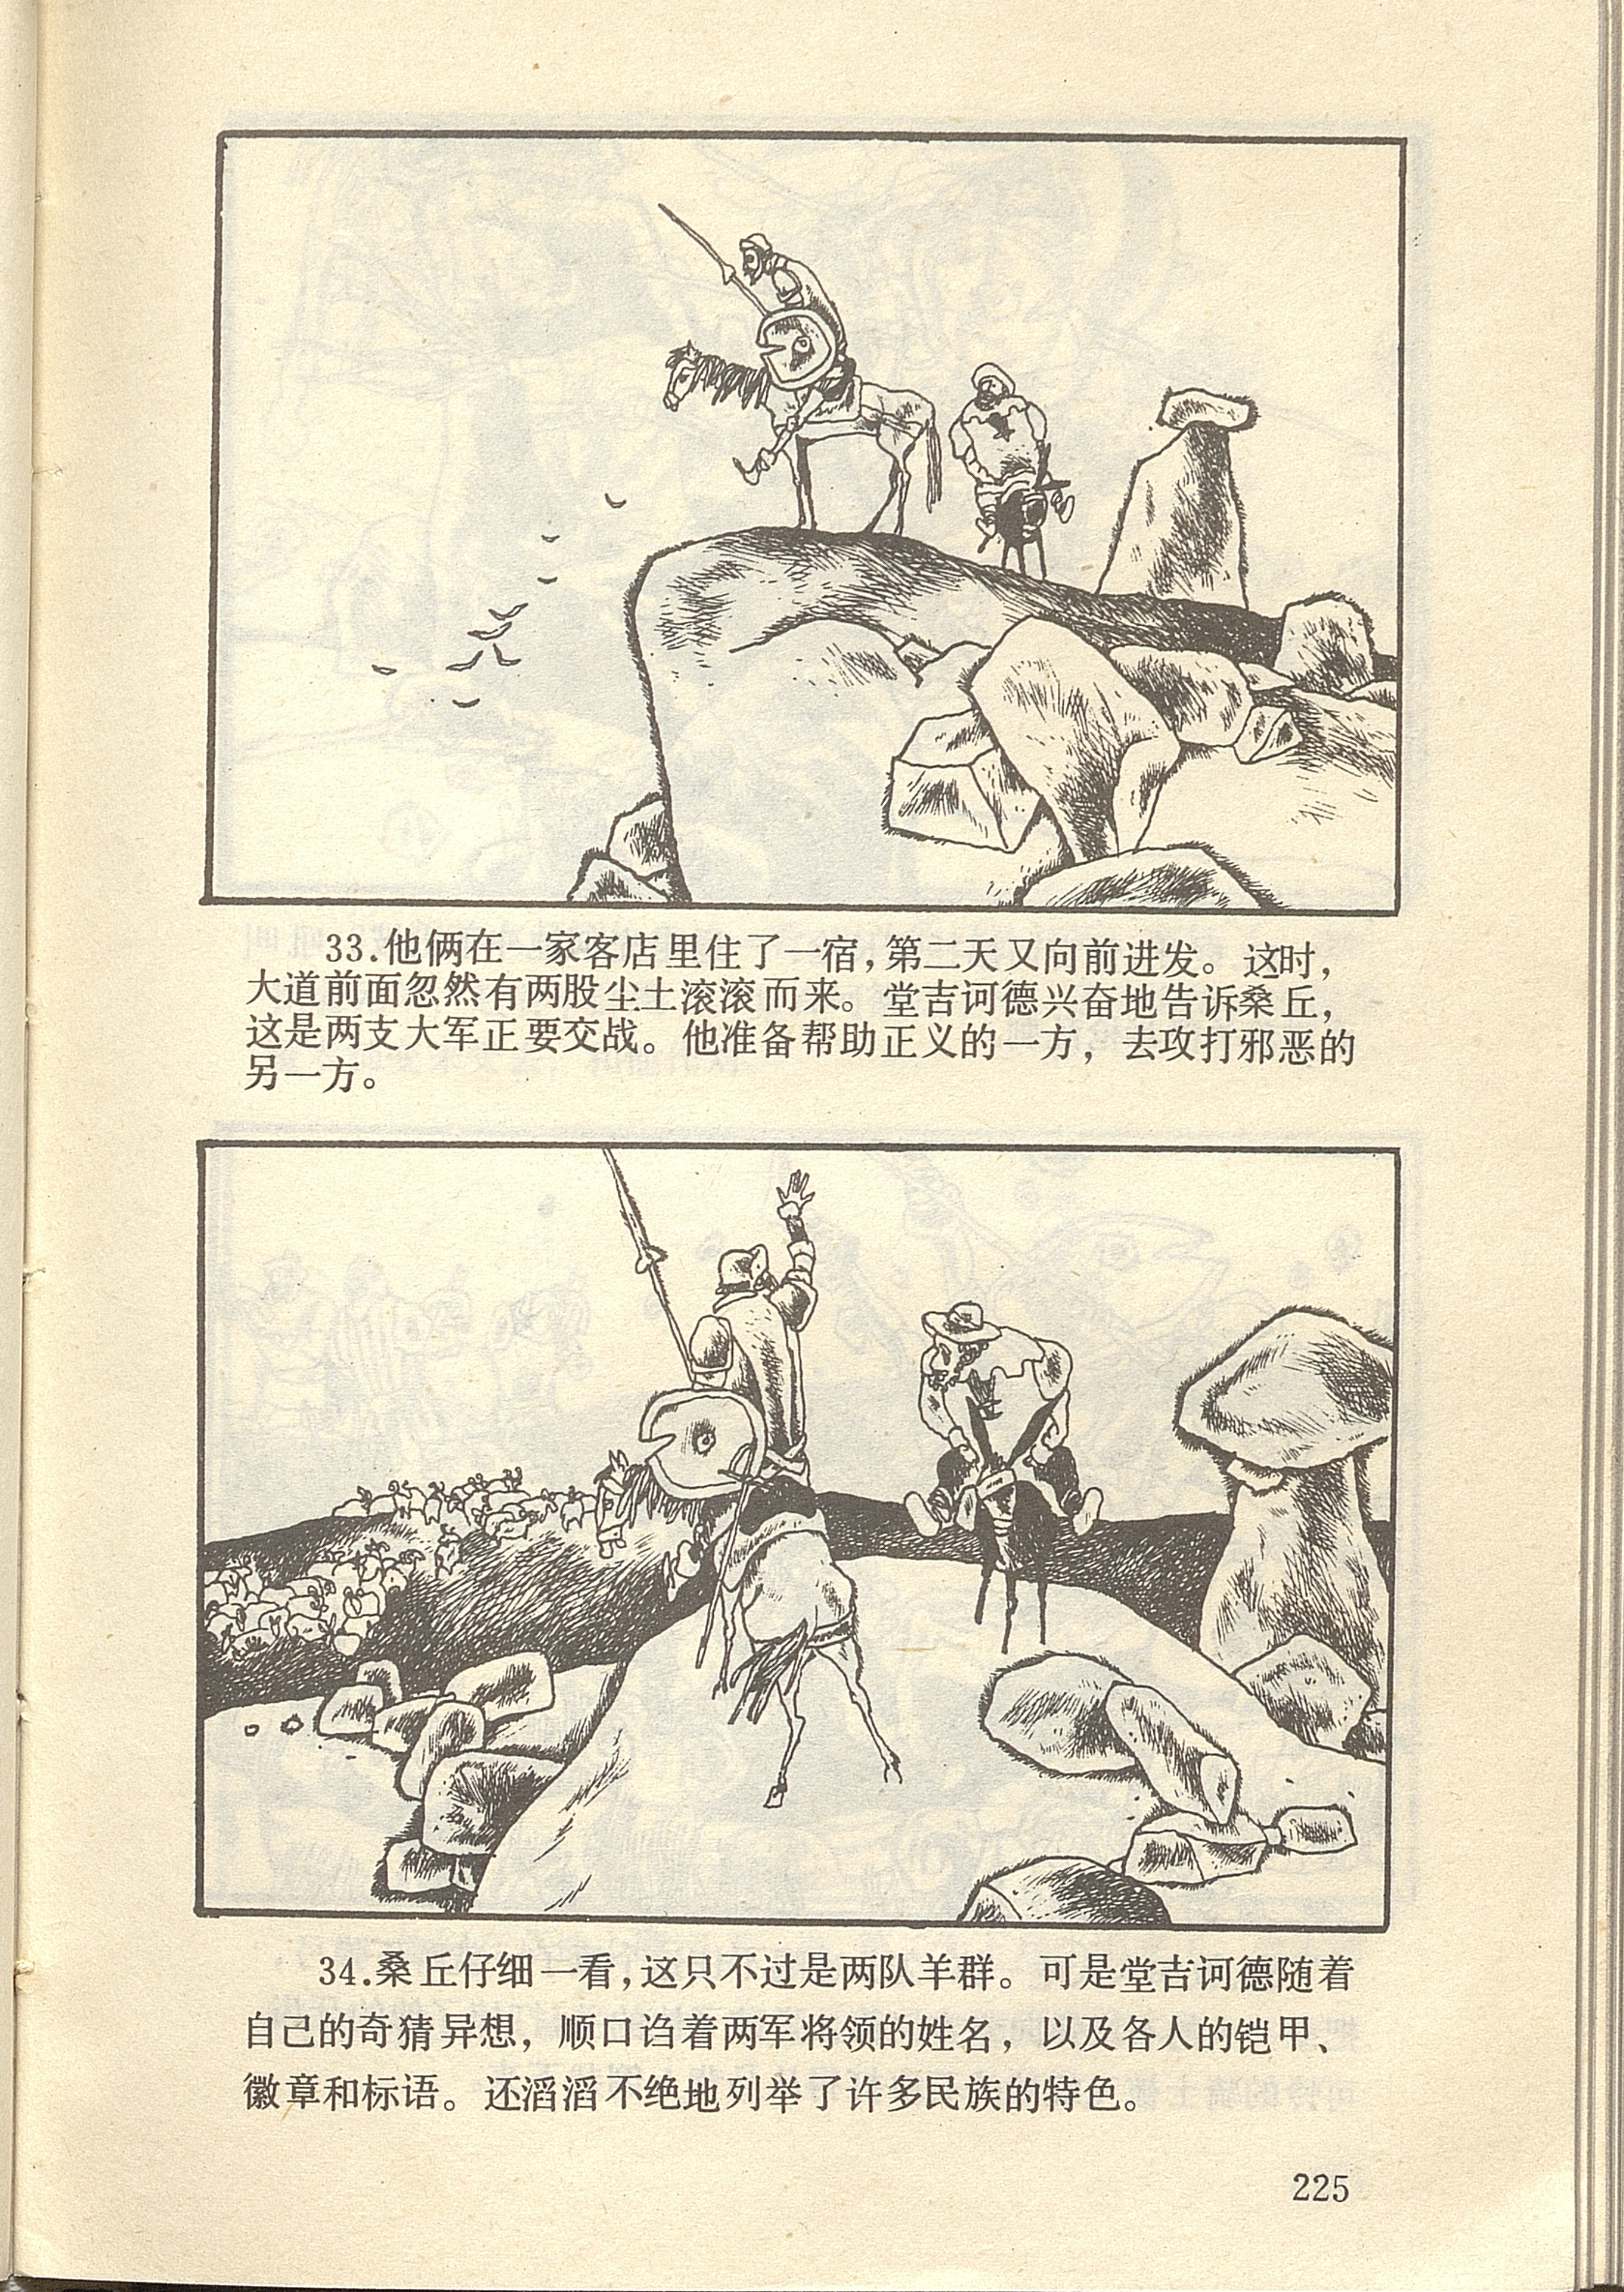 Cómics clásicos de la literatura mundial, Don Quixote / dibujo Zheng Kaijun; traducción Yang Jiang; adaptación Zhong Gaoyuan.